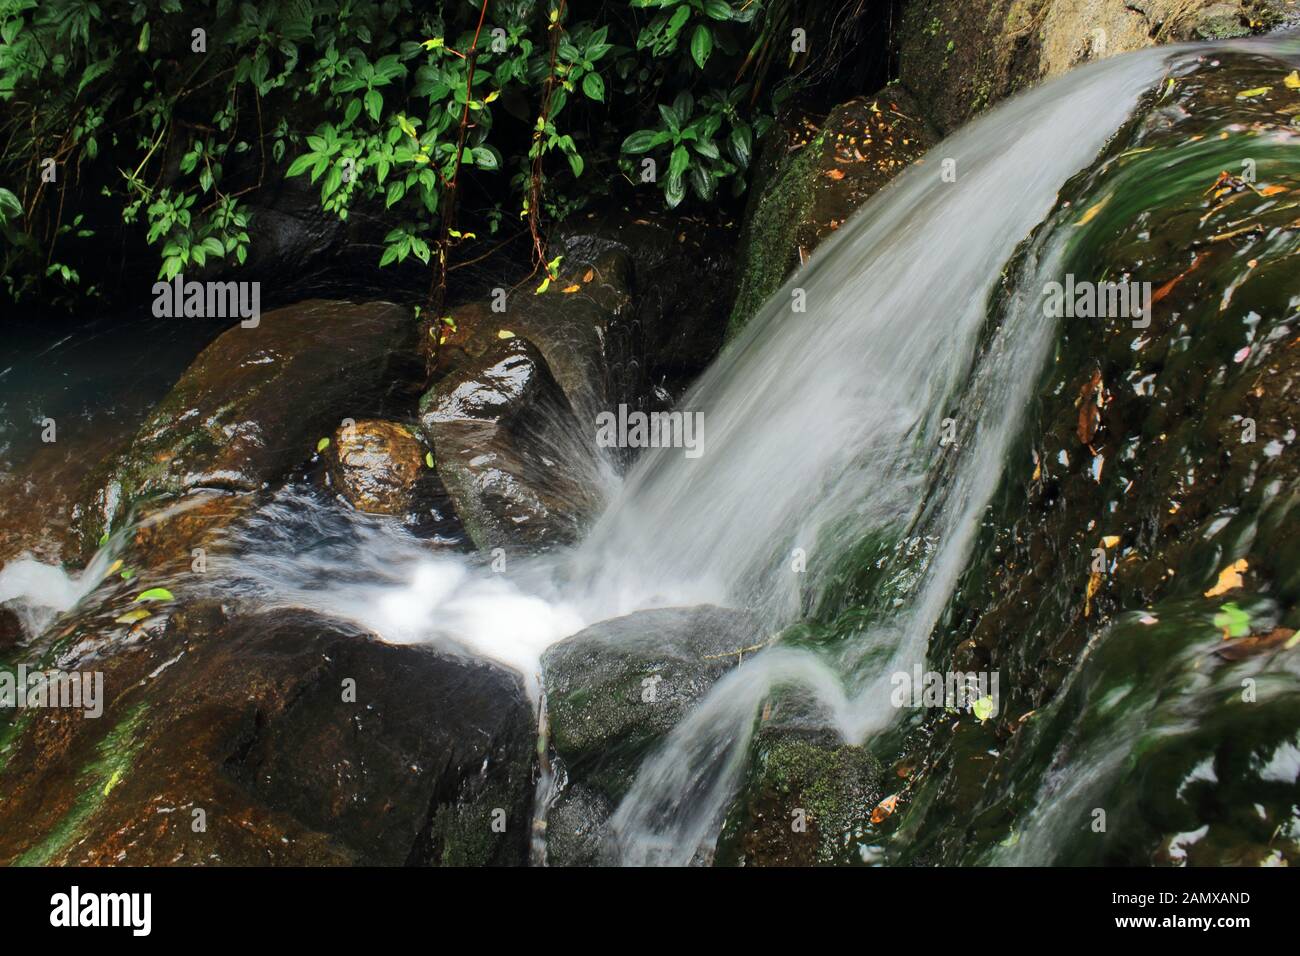 beautiful vattakanal waterfalls on levinge stream at kodaikanal, tamilnadu in india Stock Photo